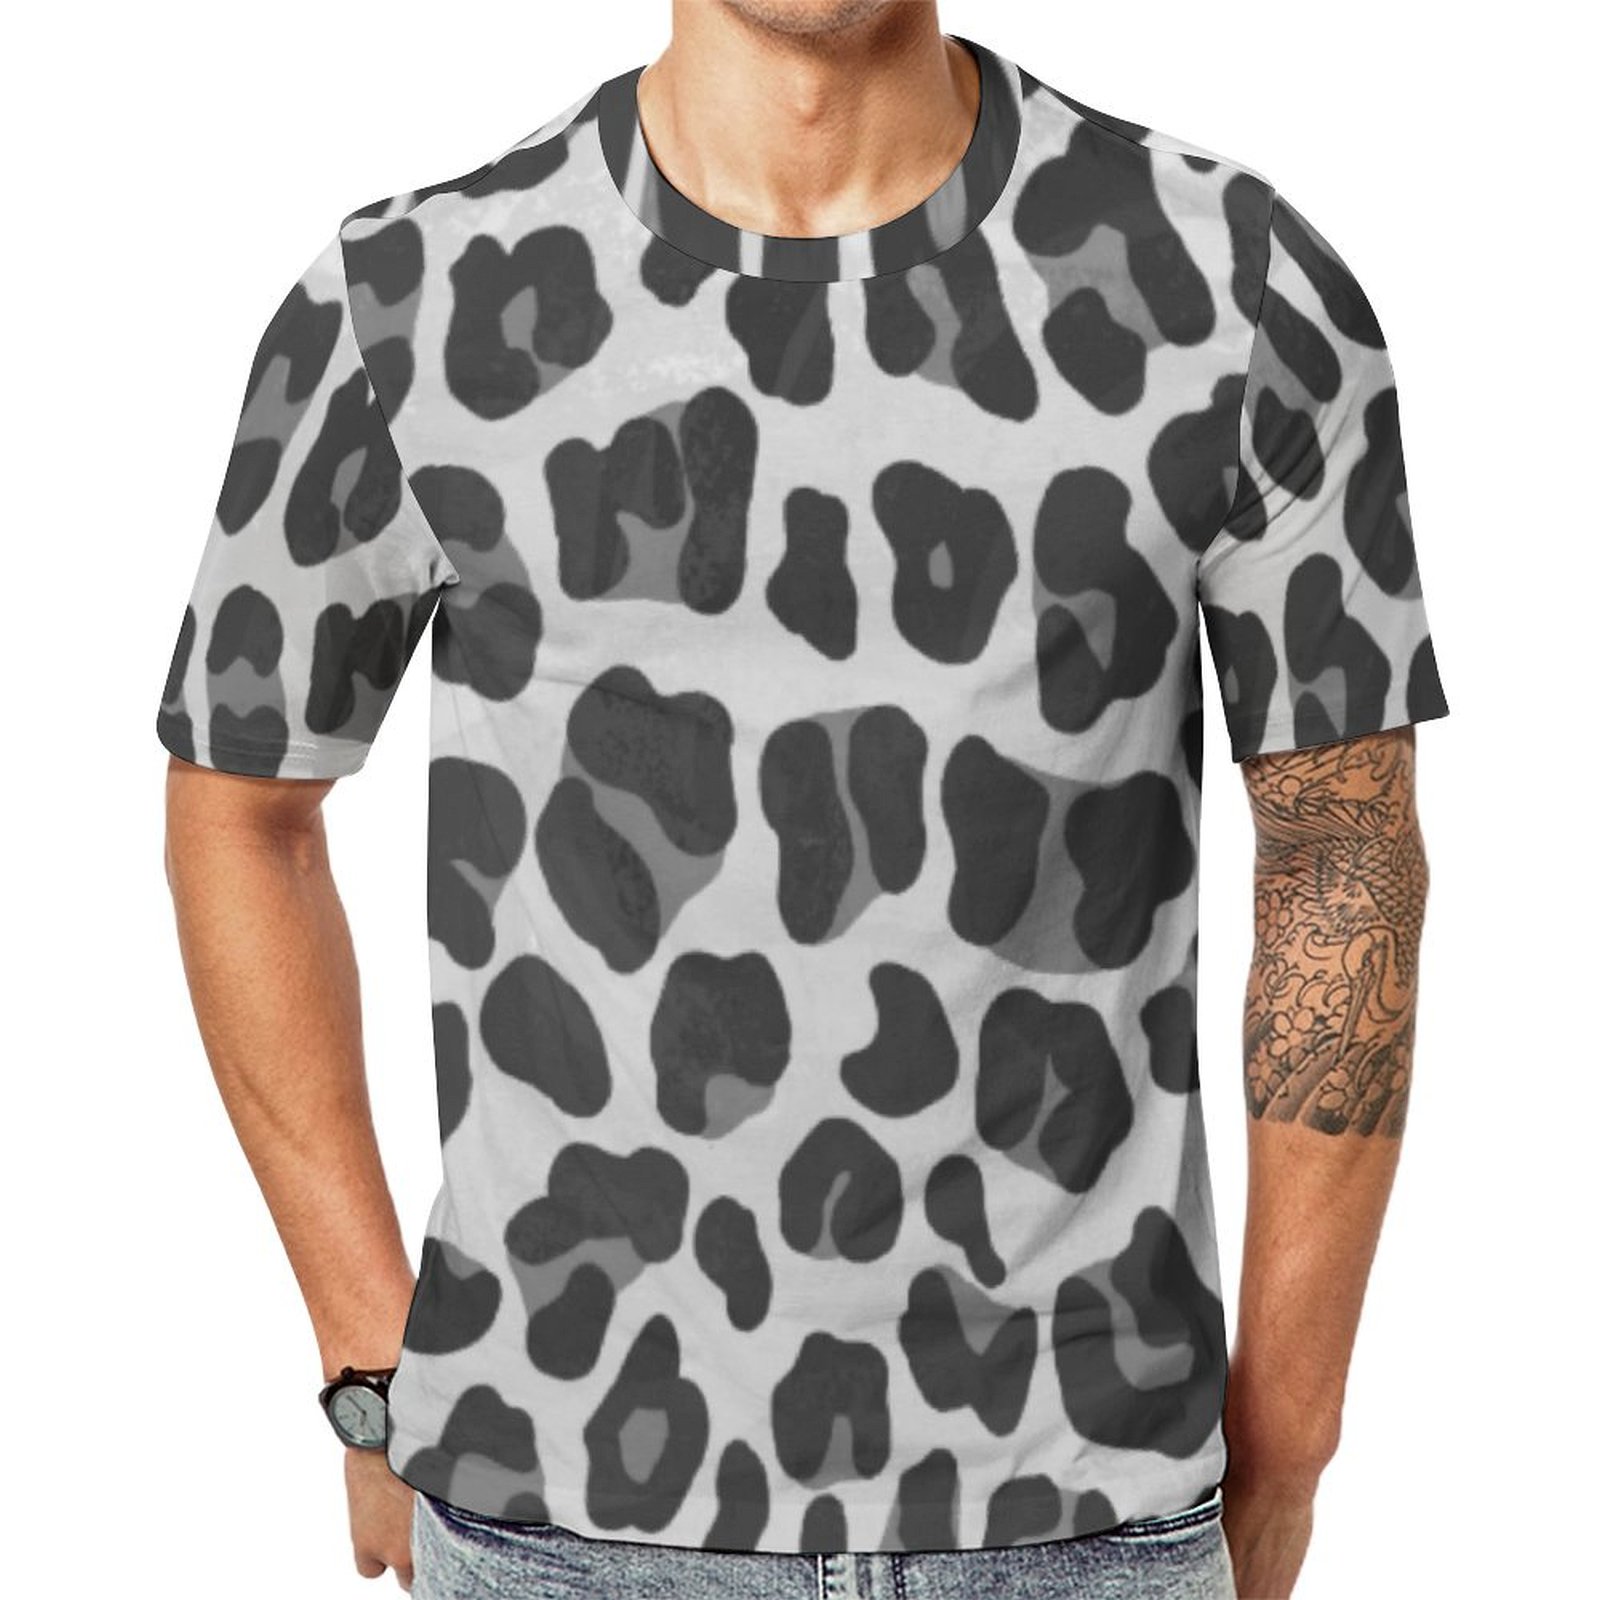 Leopard Black Light Gray Print Short Sleeve Print Unisex Tshirt Summer Casual Tees for Men and Women Coolcoshirts